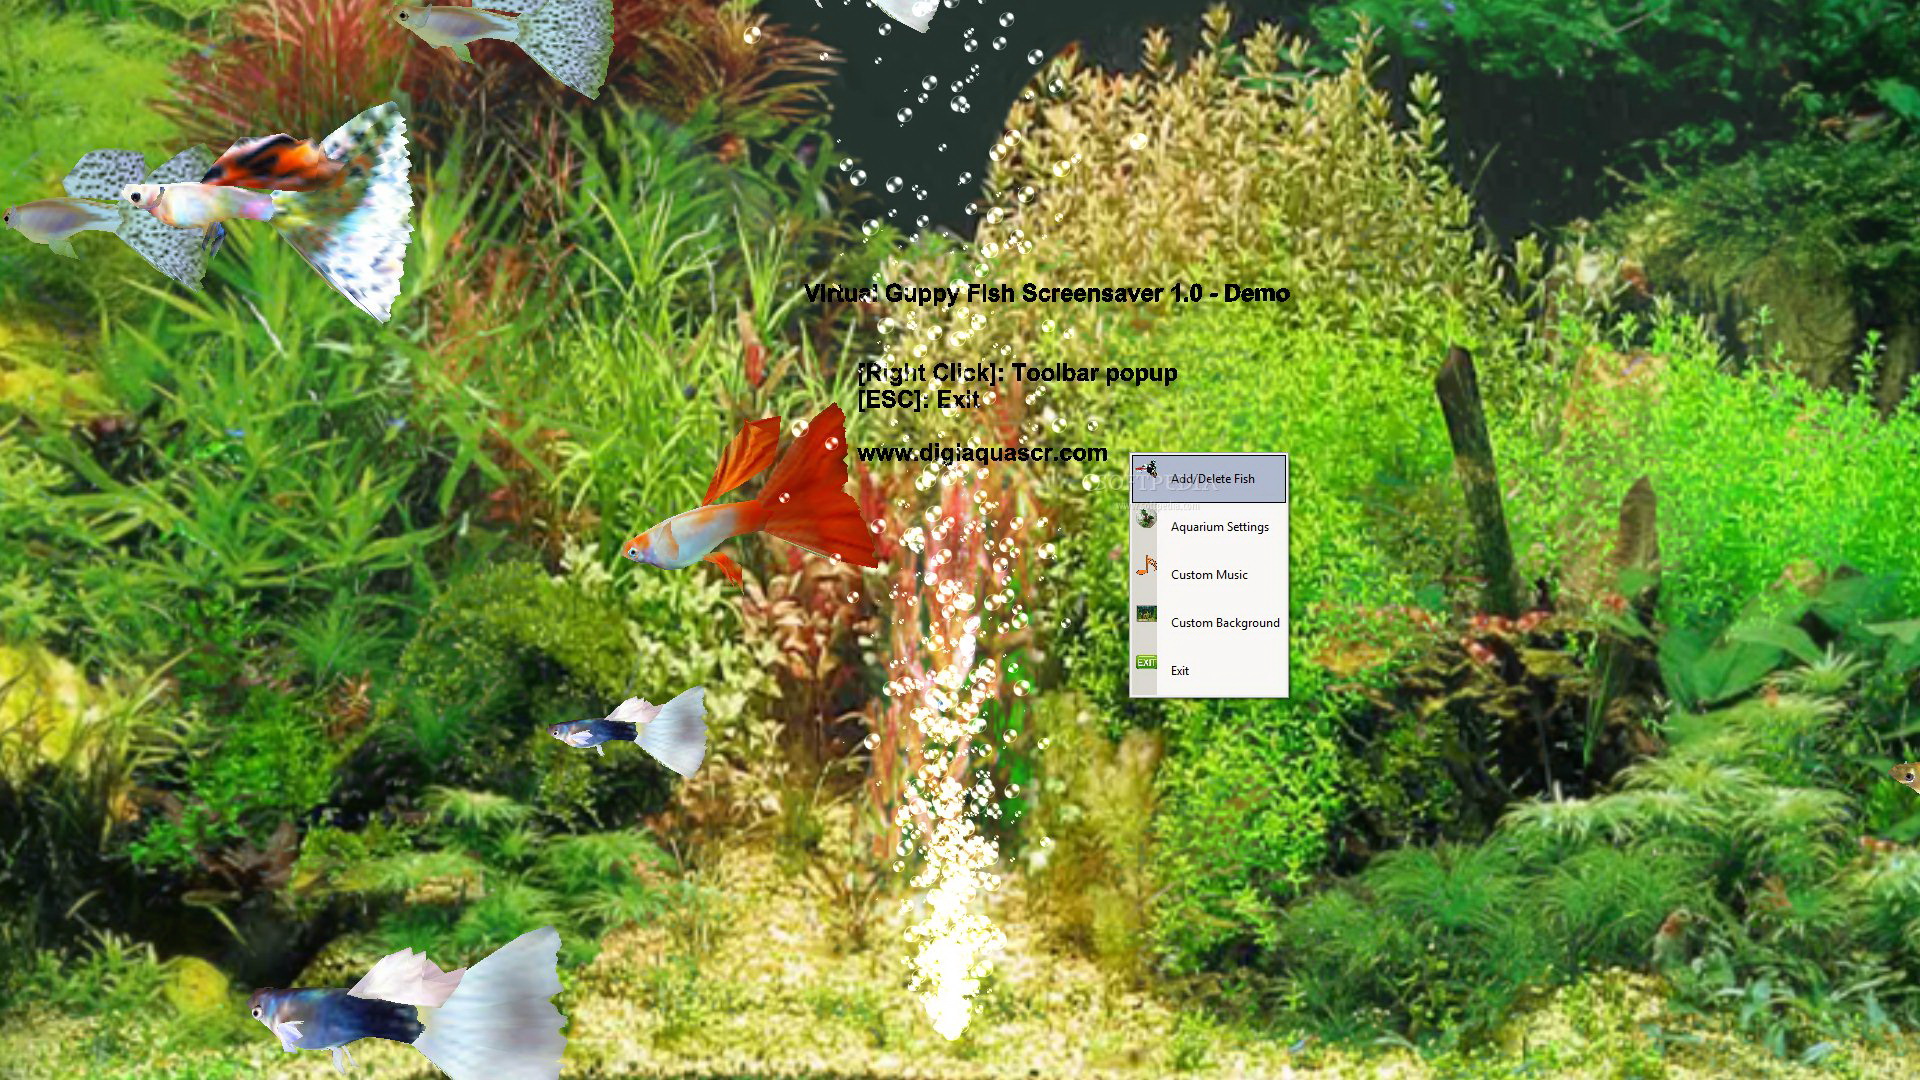 Virtual Guppy Fish Screensaver